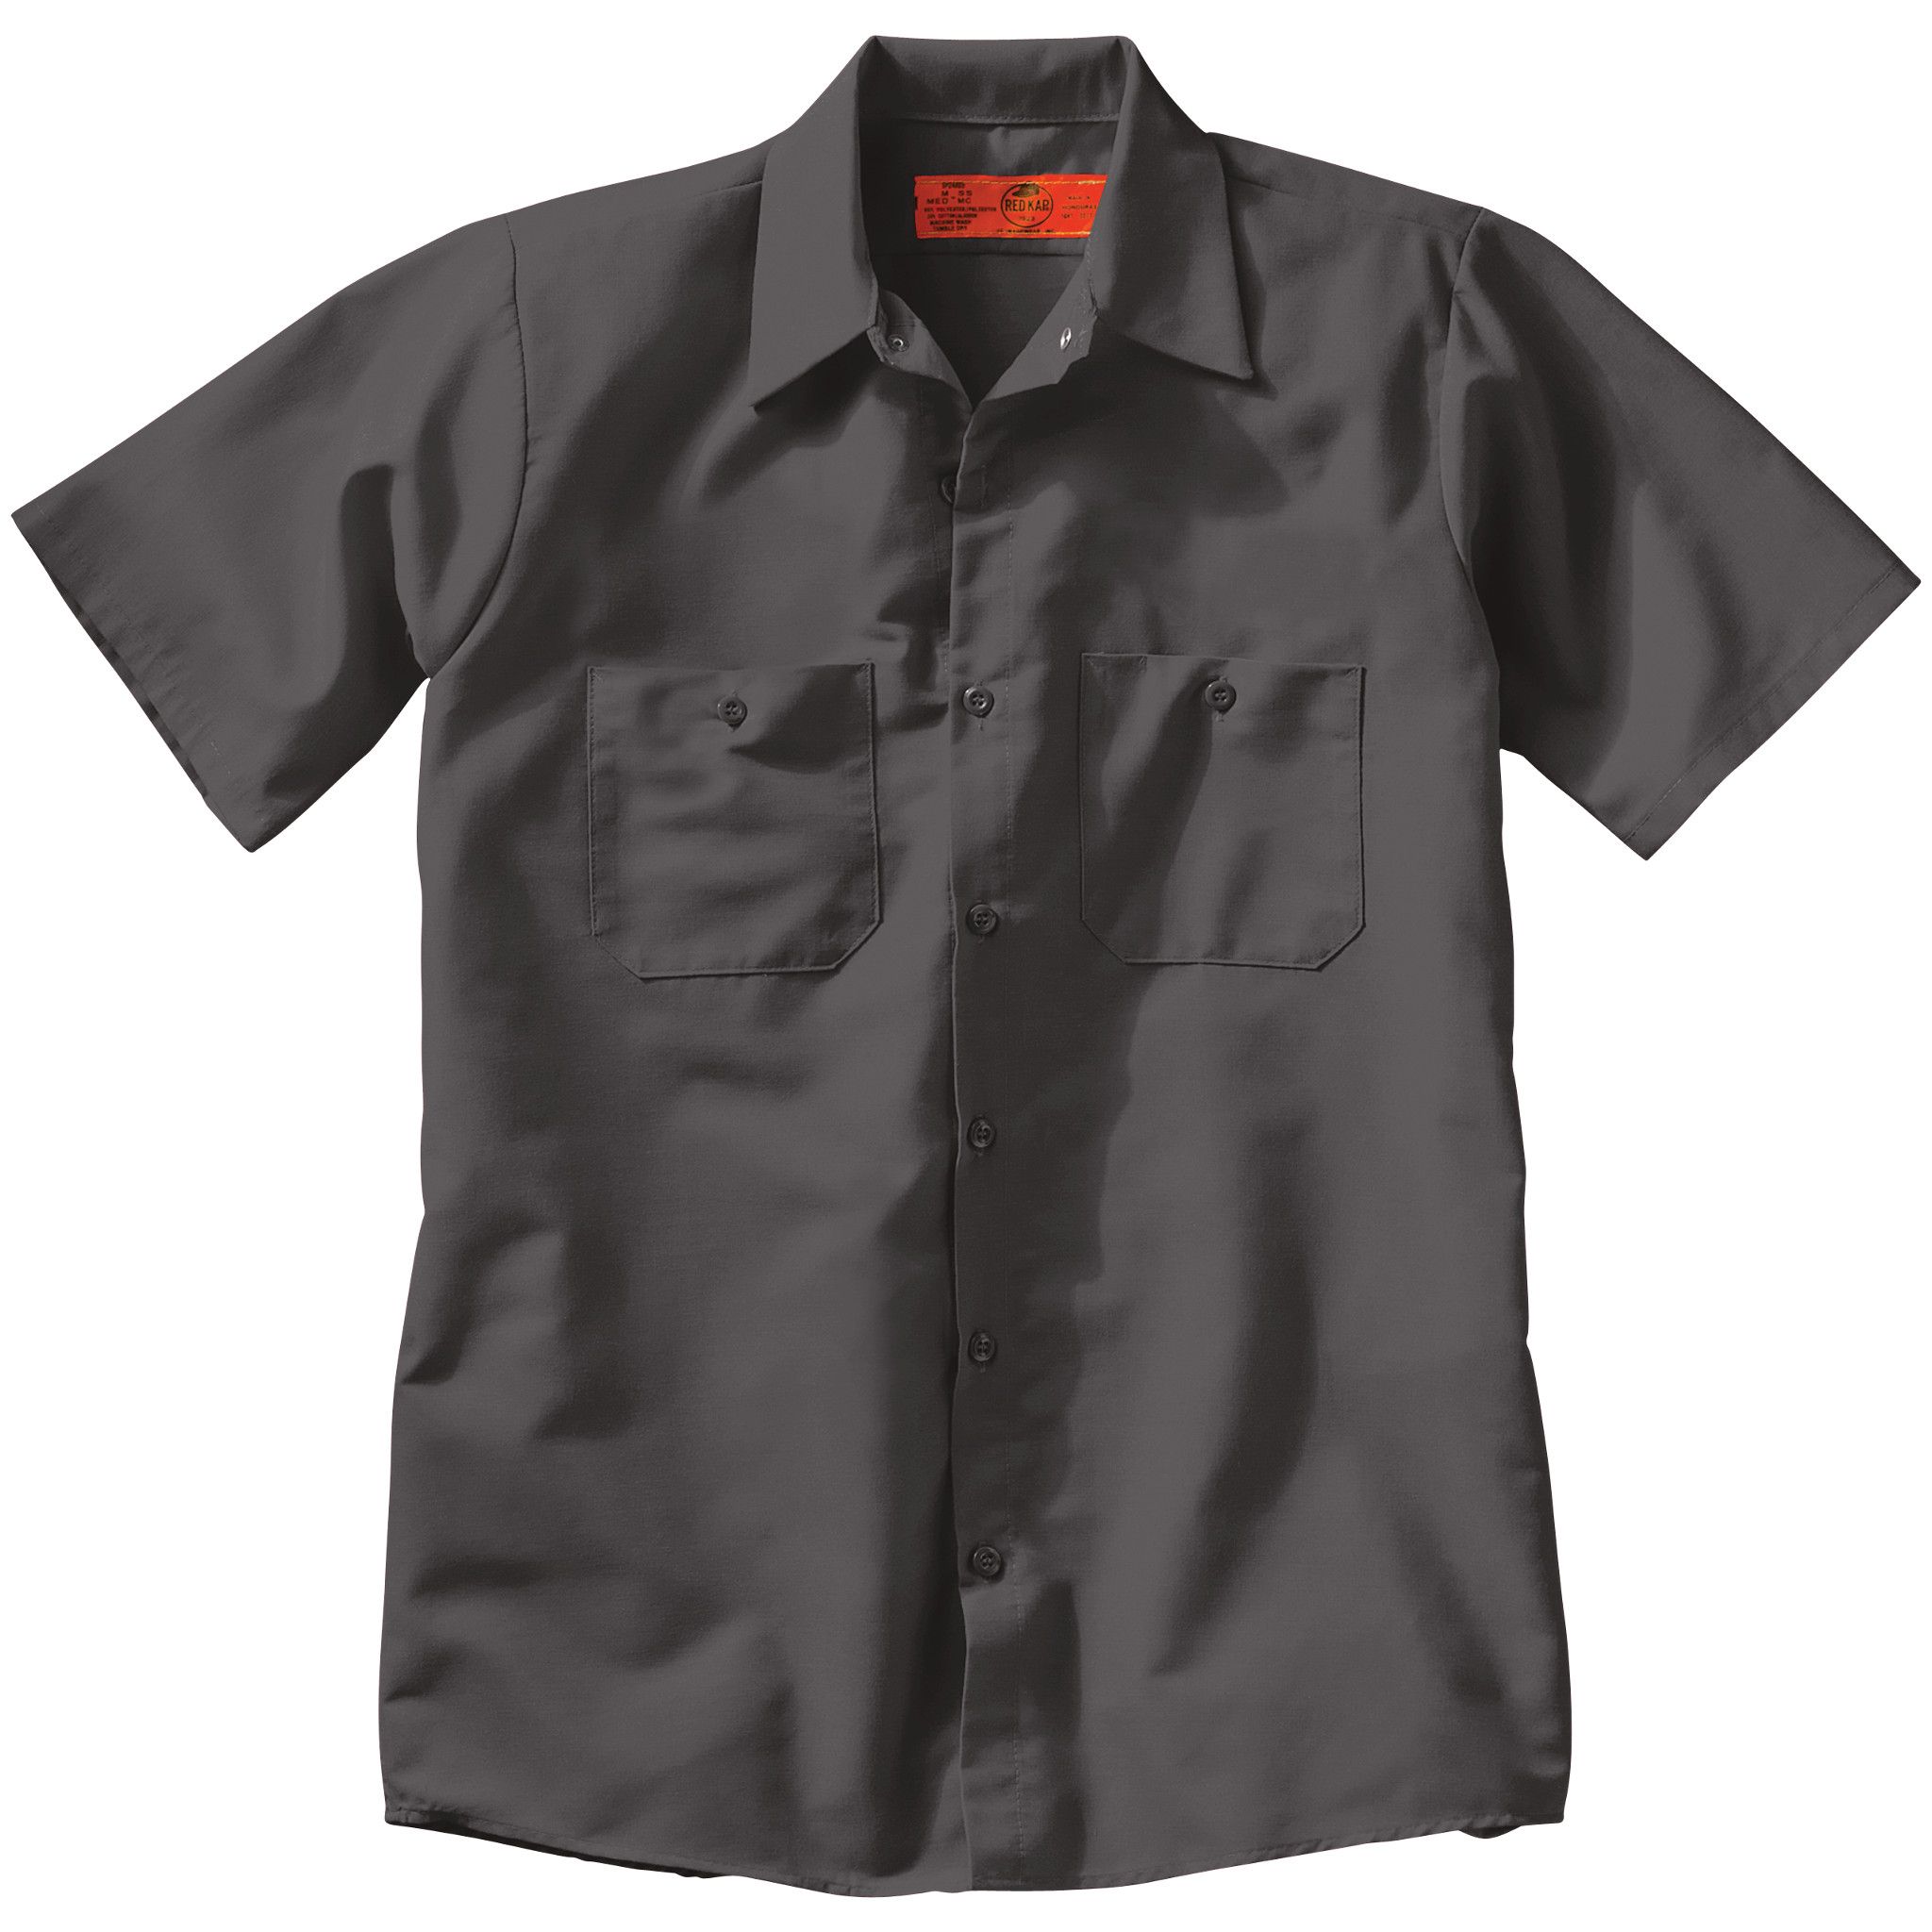 Solid color maintenance worker shirt